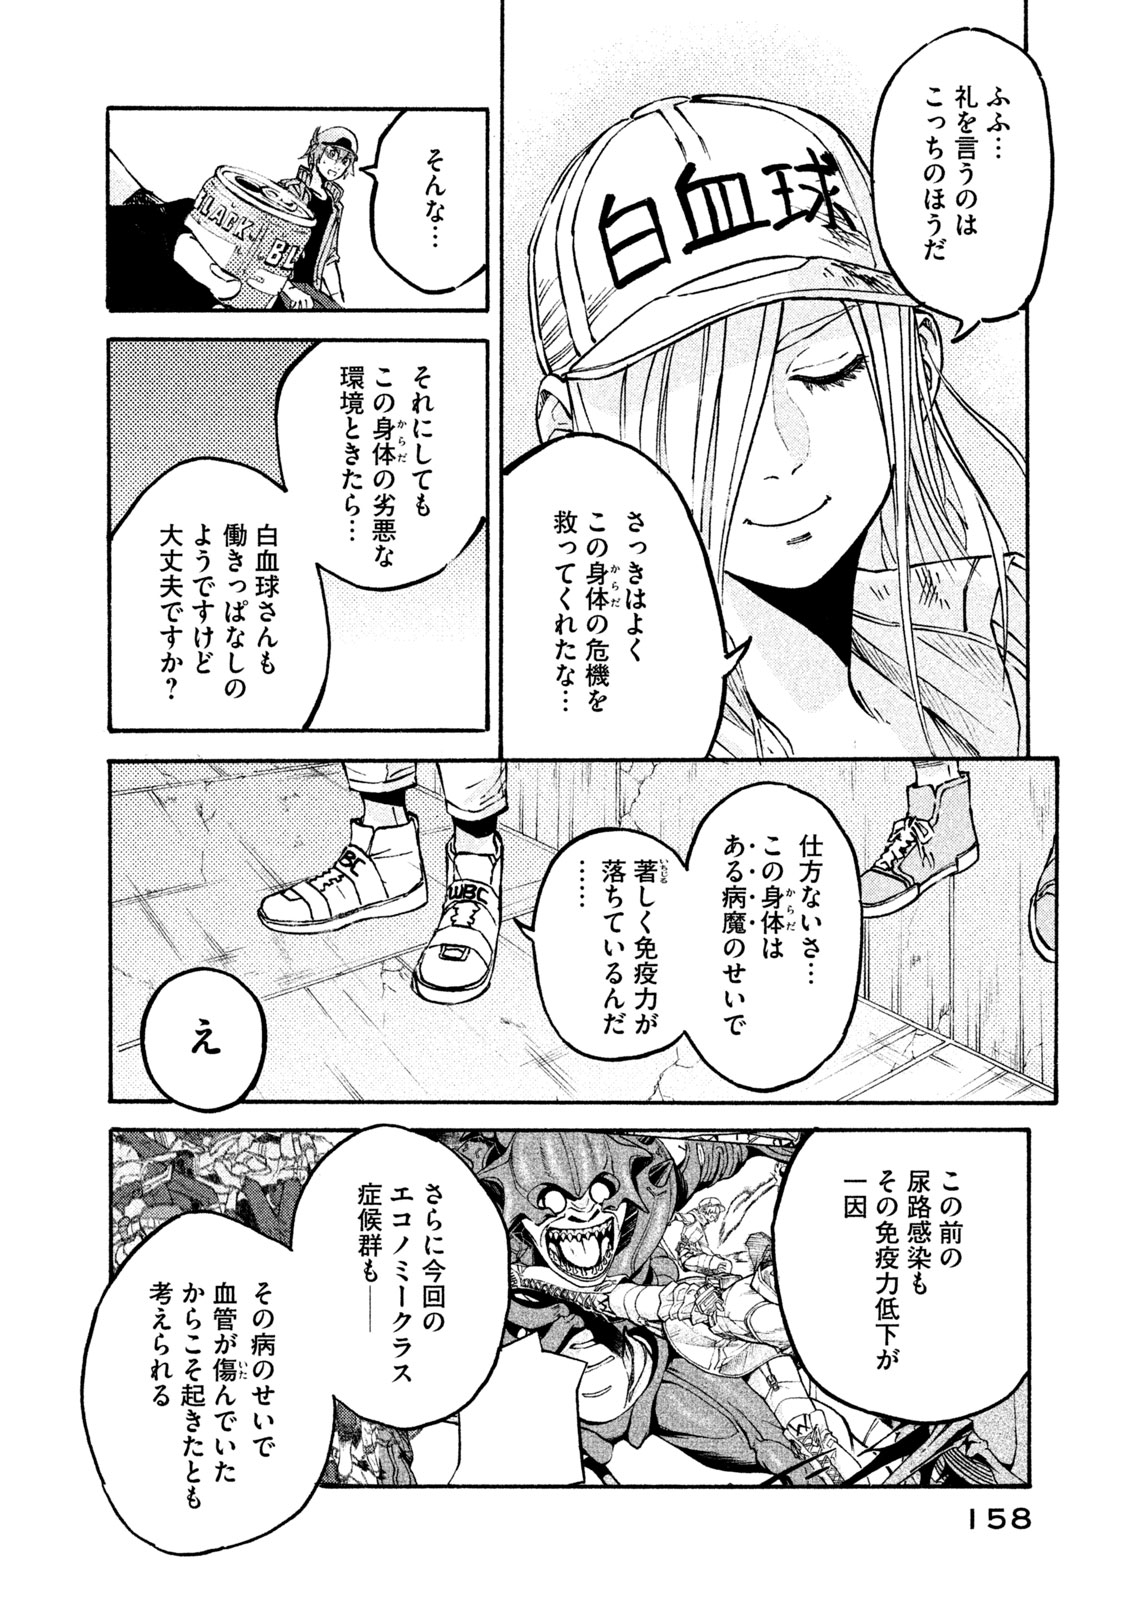 Hataraku Saibou BLACK - Chapter 17 - Page 22